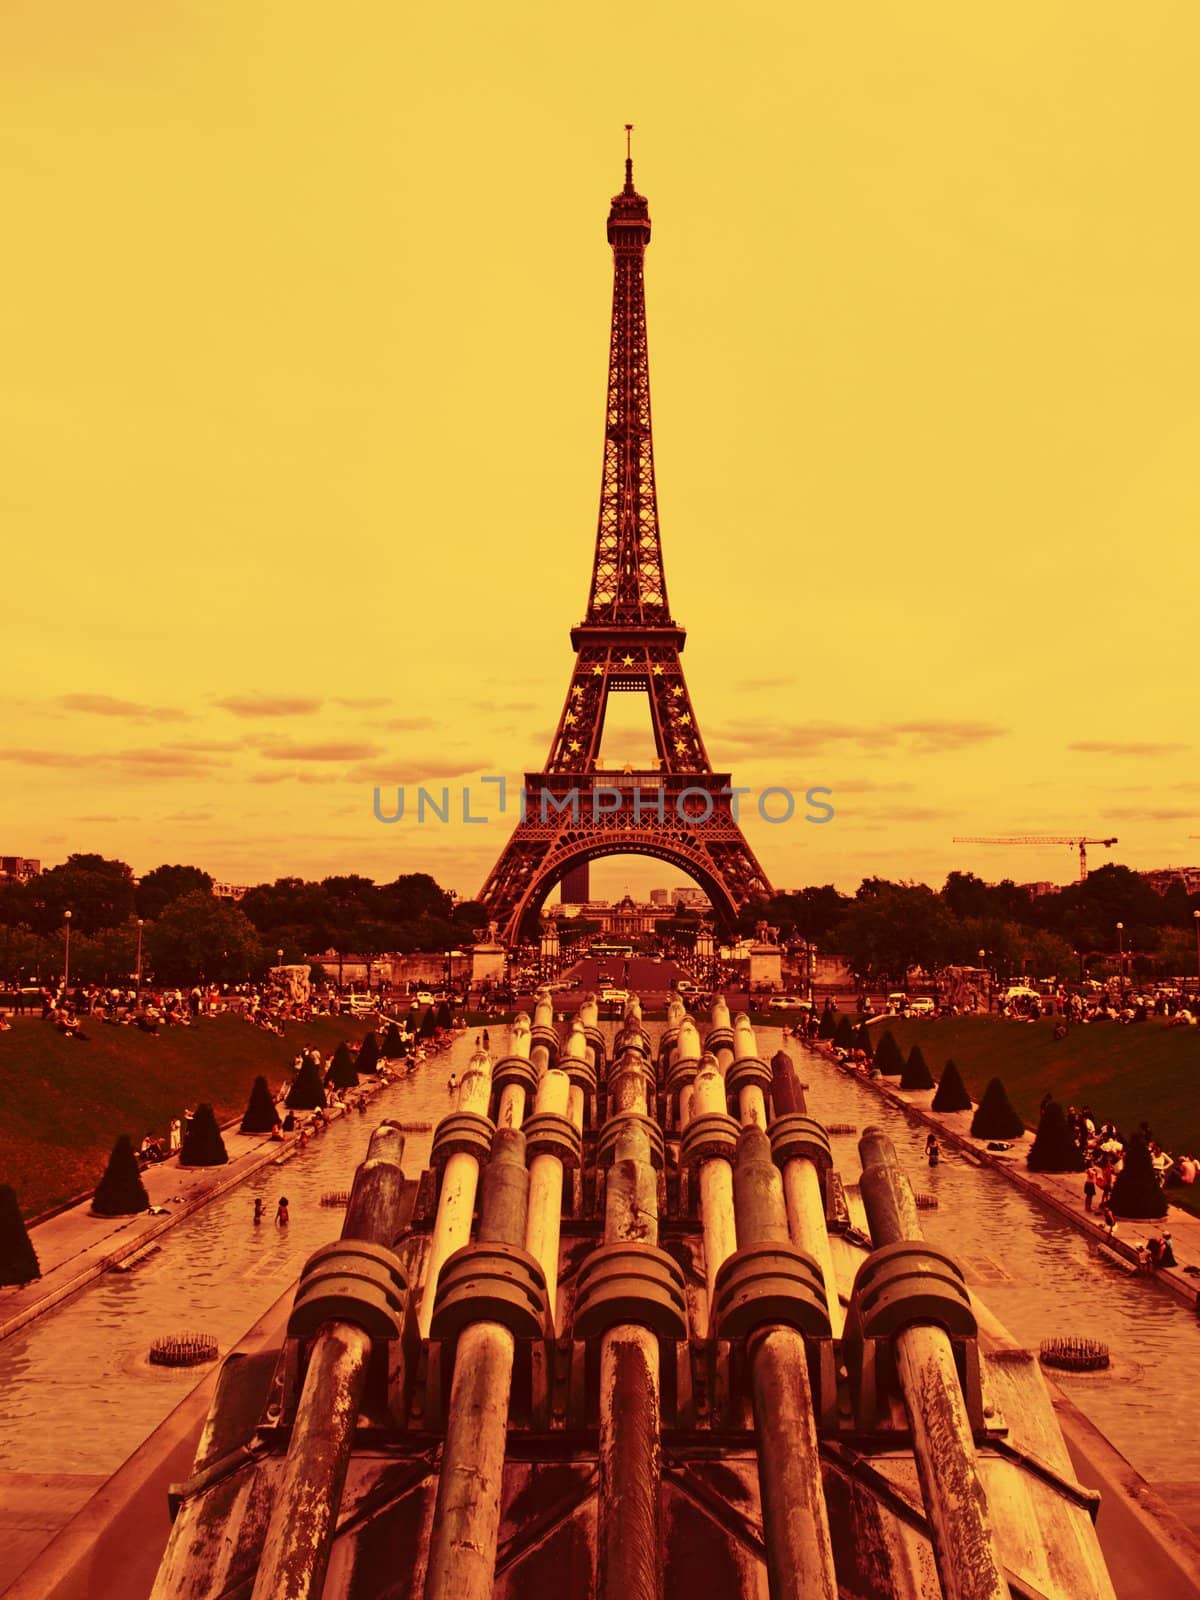 Eiffel tower by jbouzou